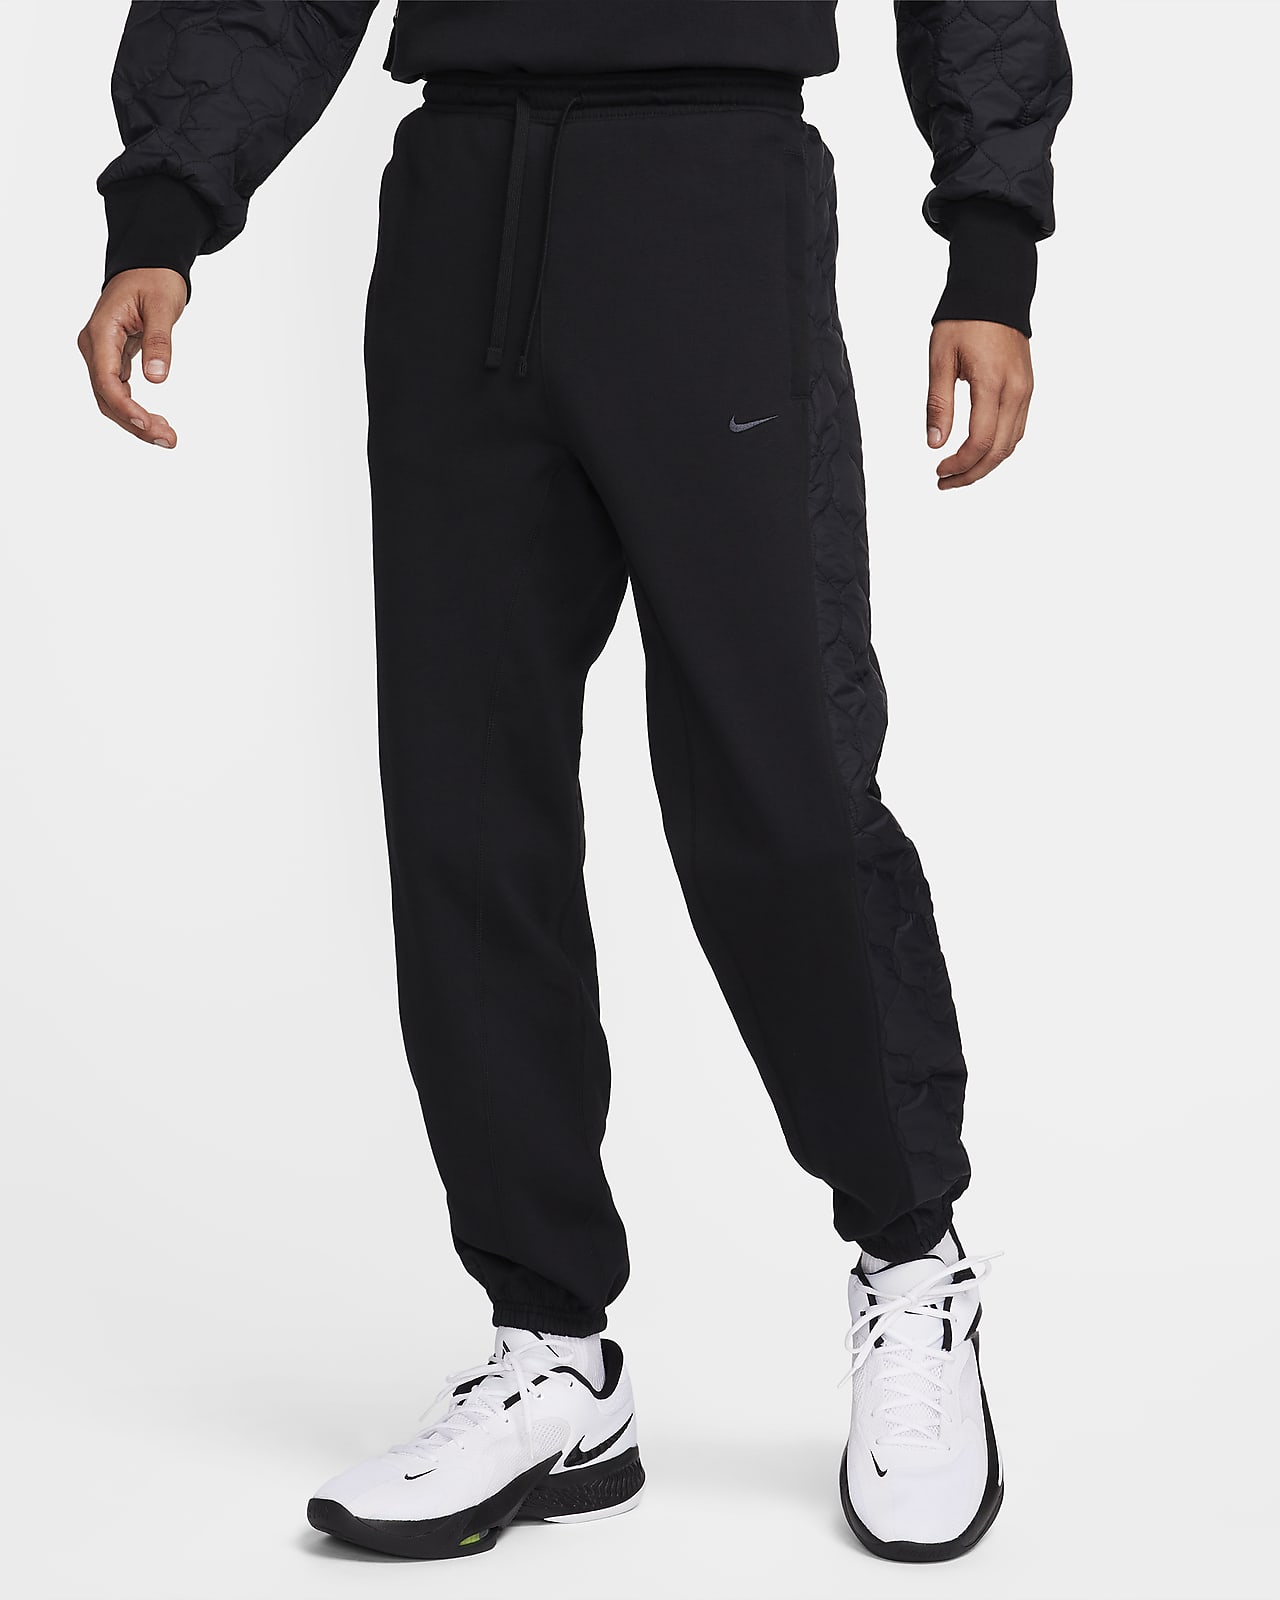 Nike Standard Issue Men's Basketball Pants